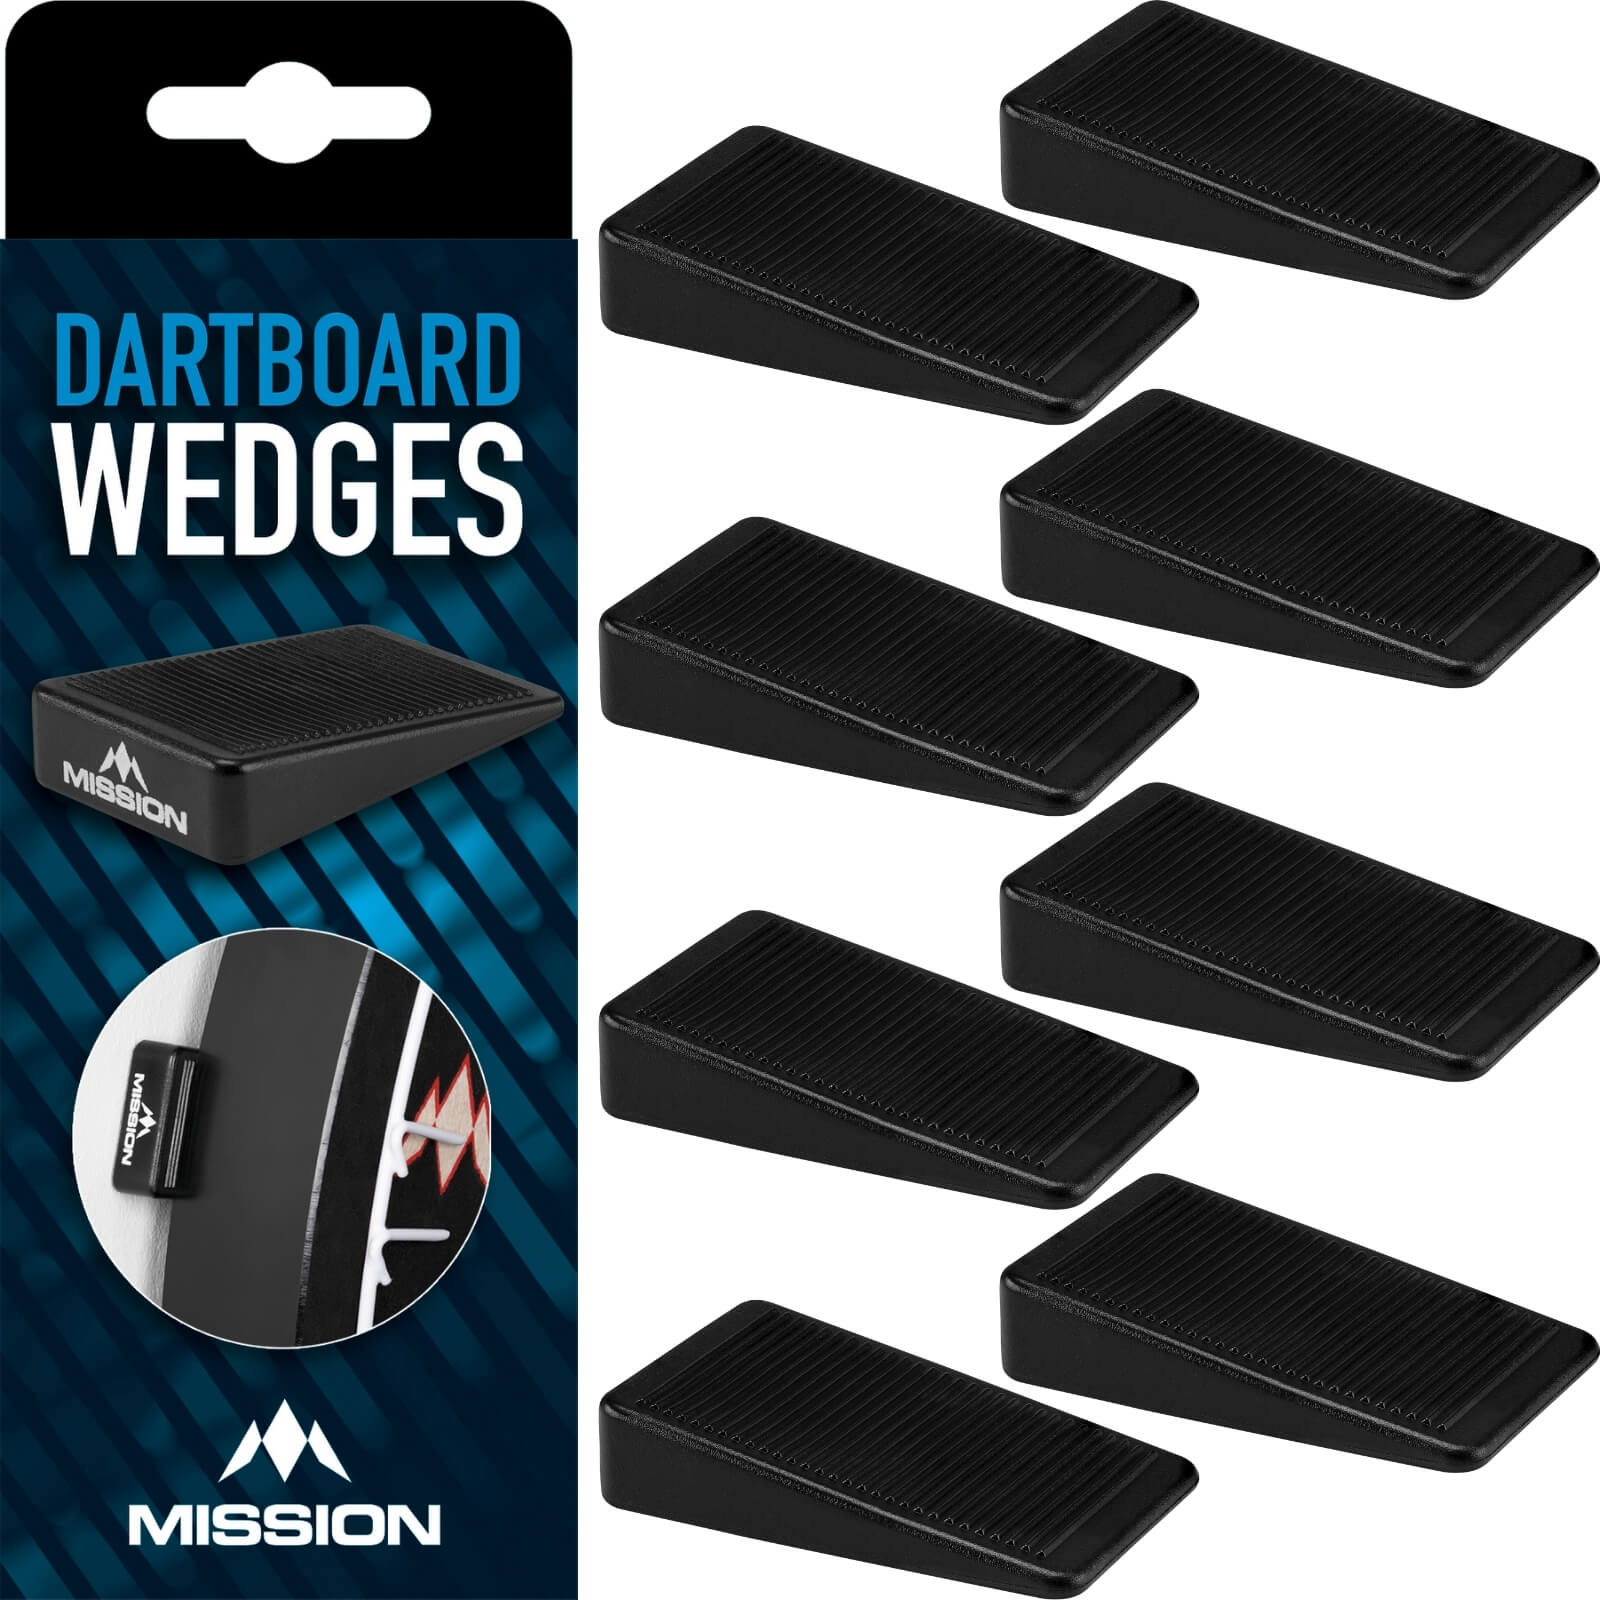 Dartboard Accessories - Mission - Dartboard Wedges - 8 Pack 